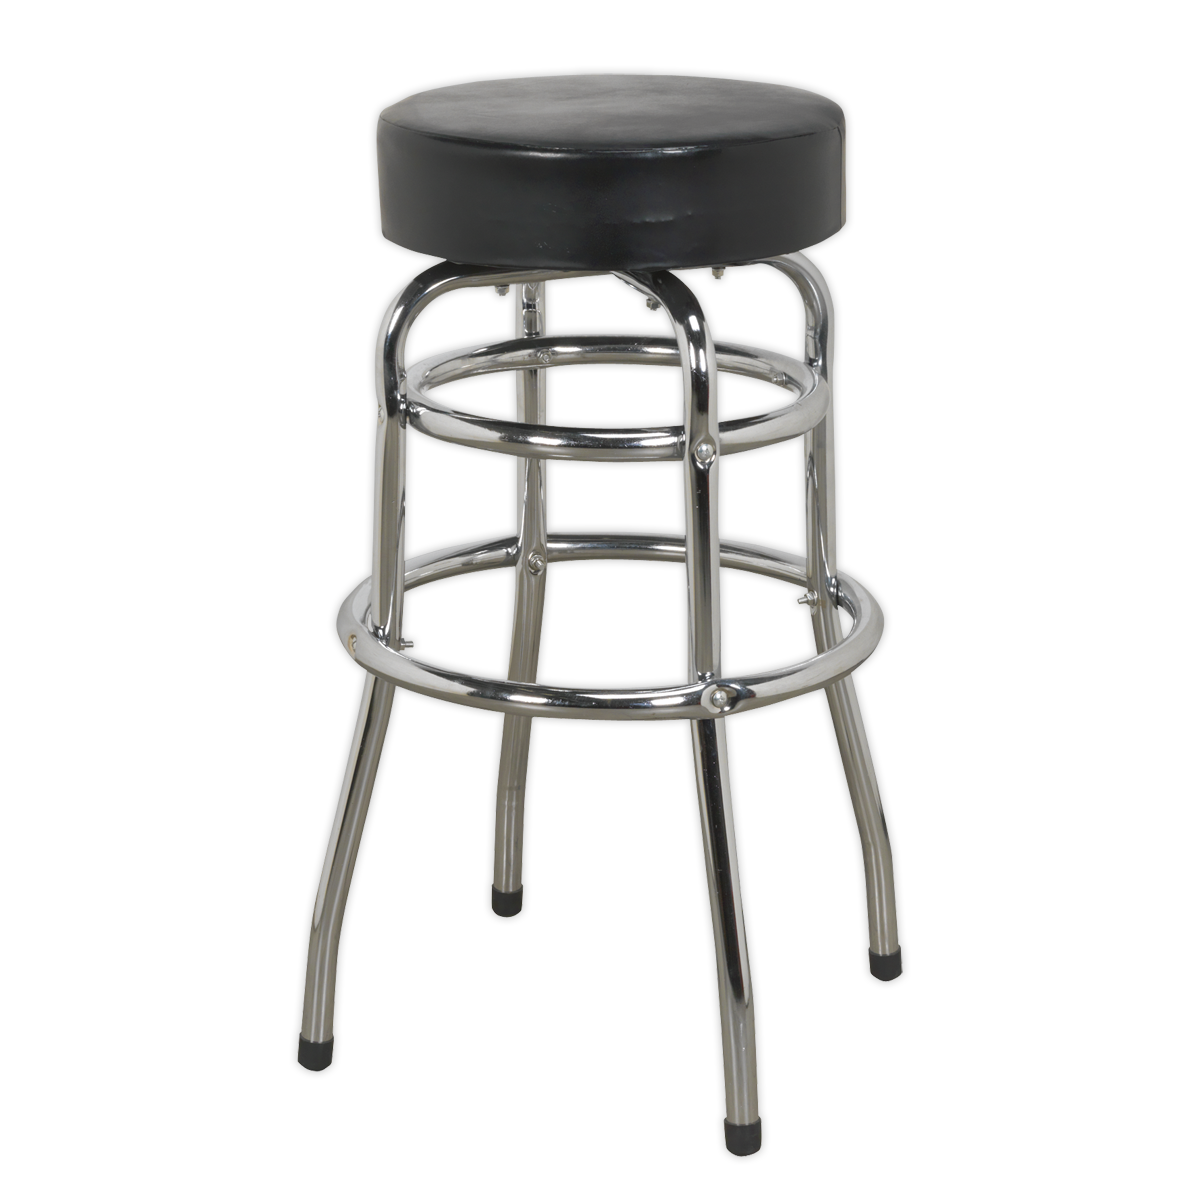 Sealey workshop/ garage comfortable swivel stool